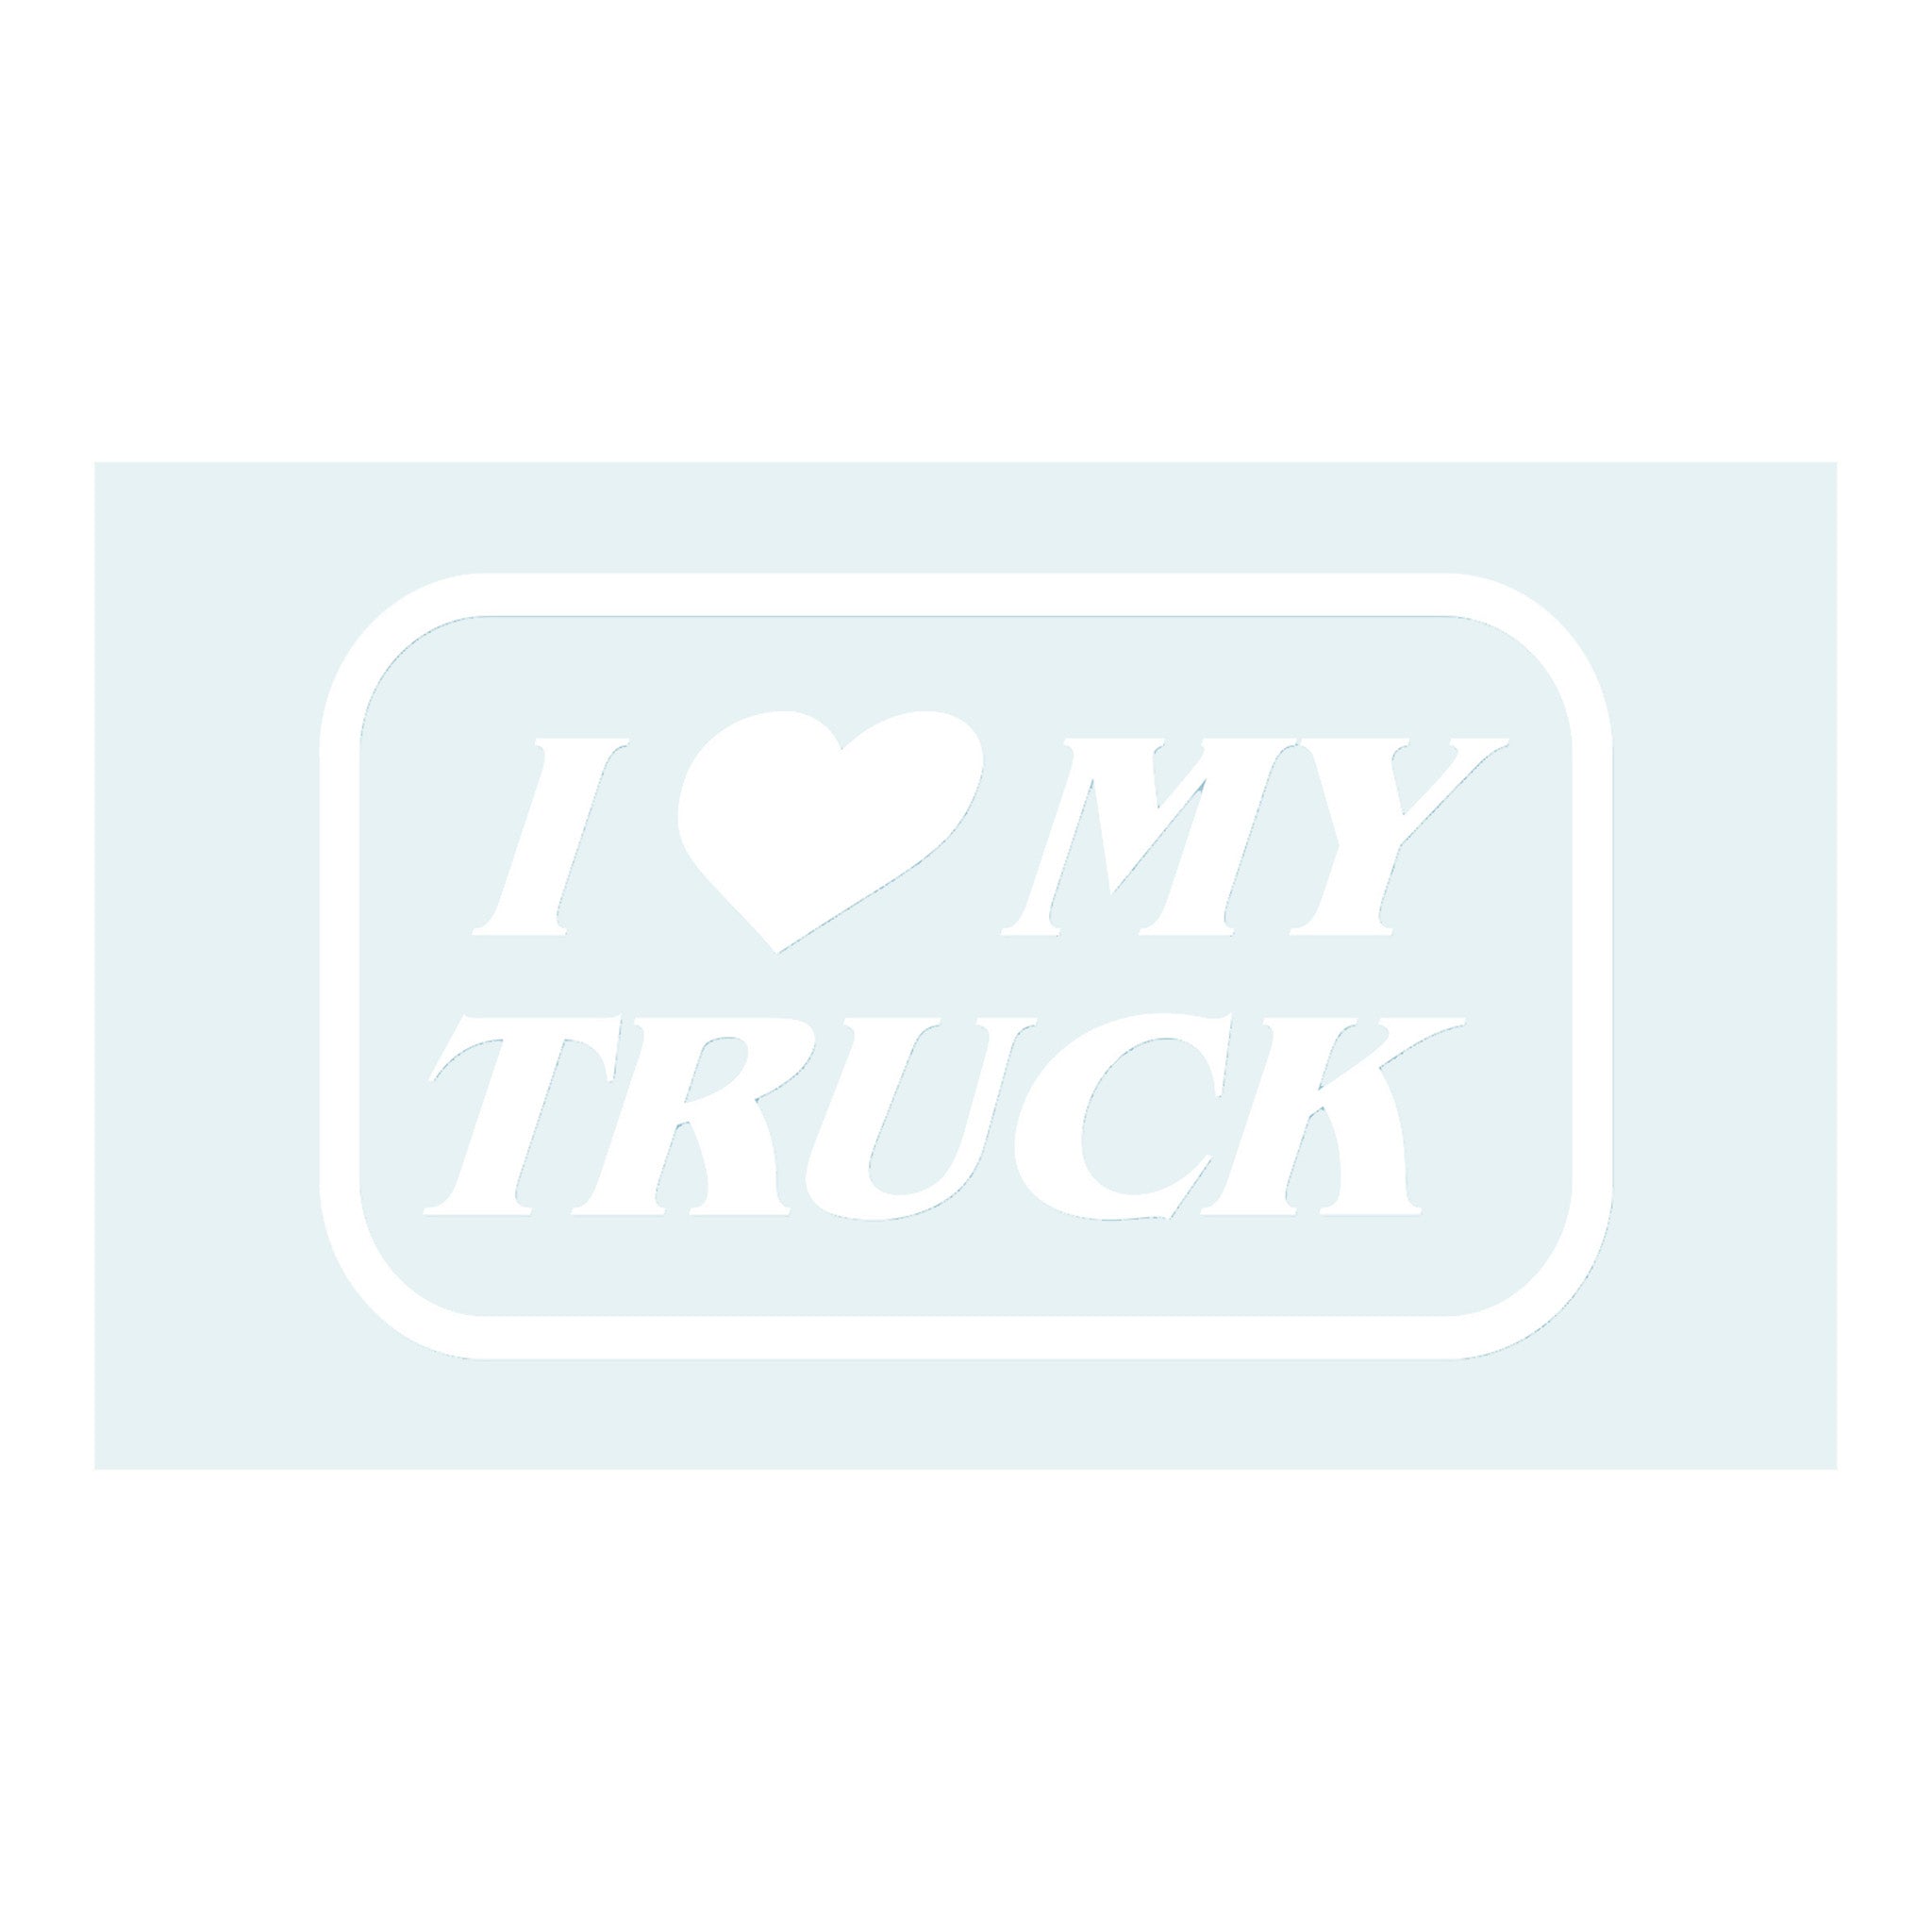 I Heart My Truck Decal White